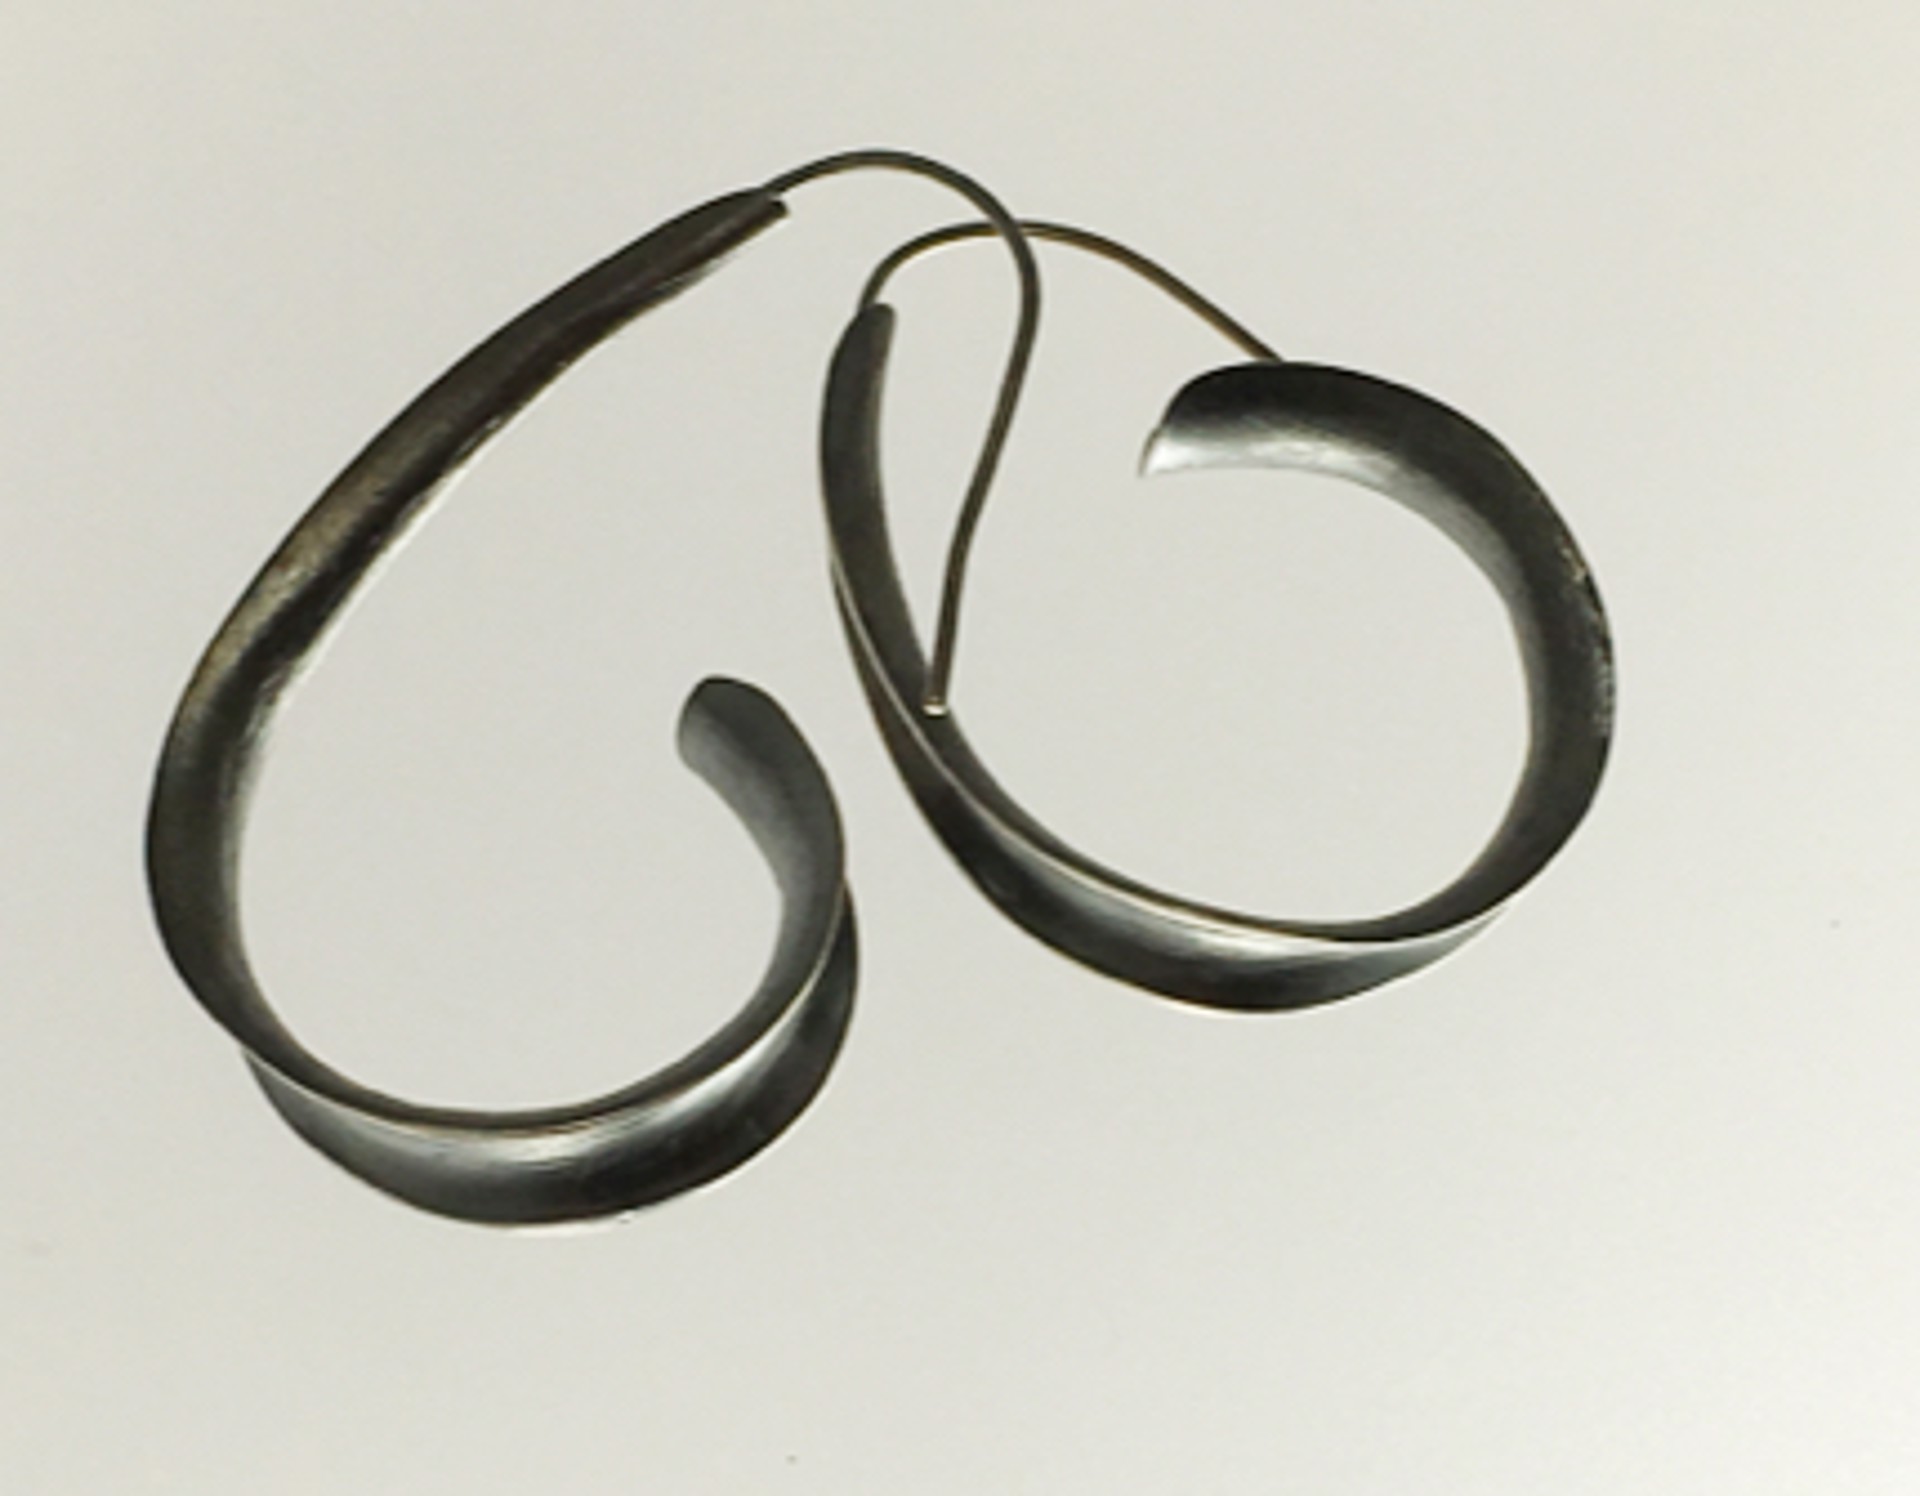 Earrings - Sterling Silver Hoops - Medium by Pattie Parkhurst